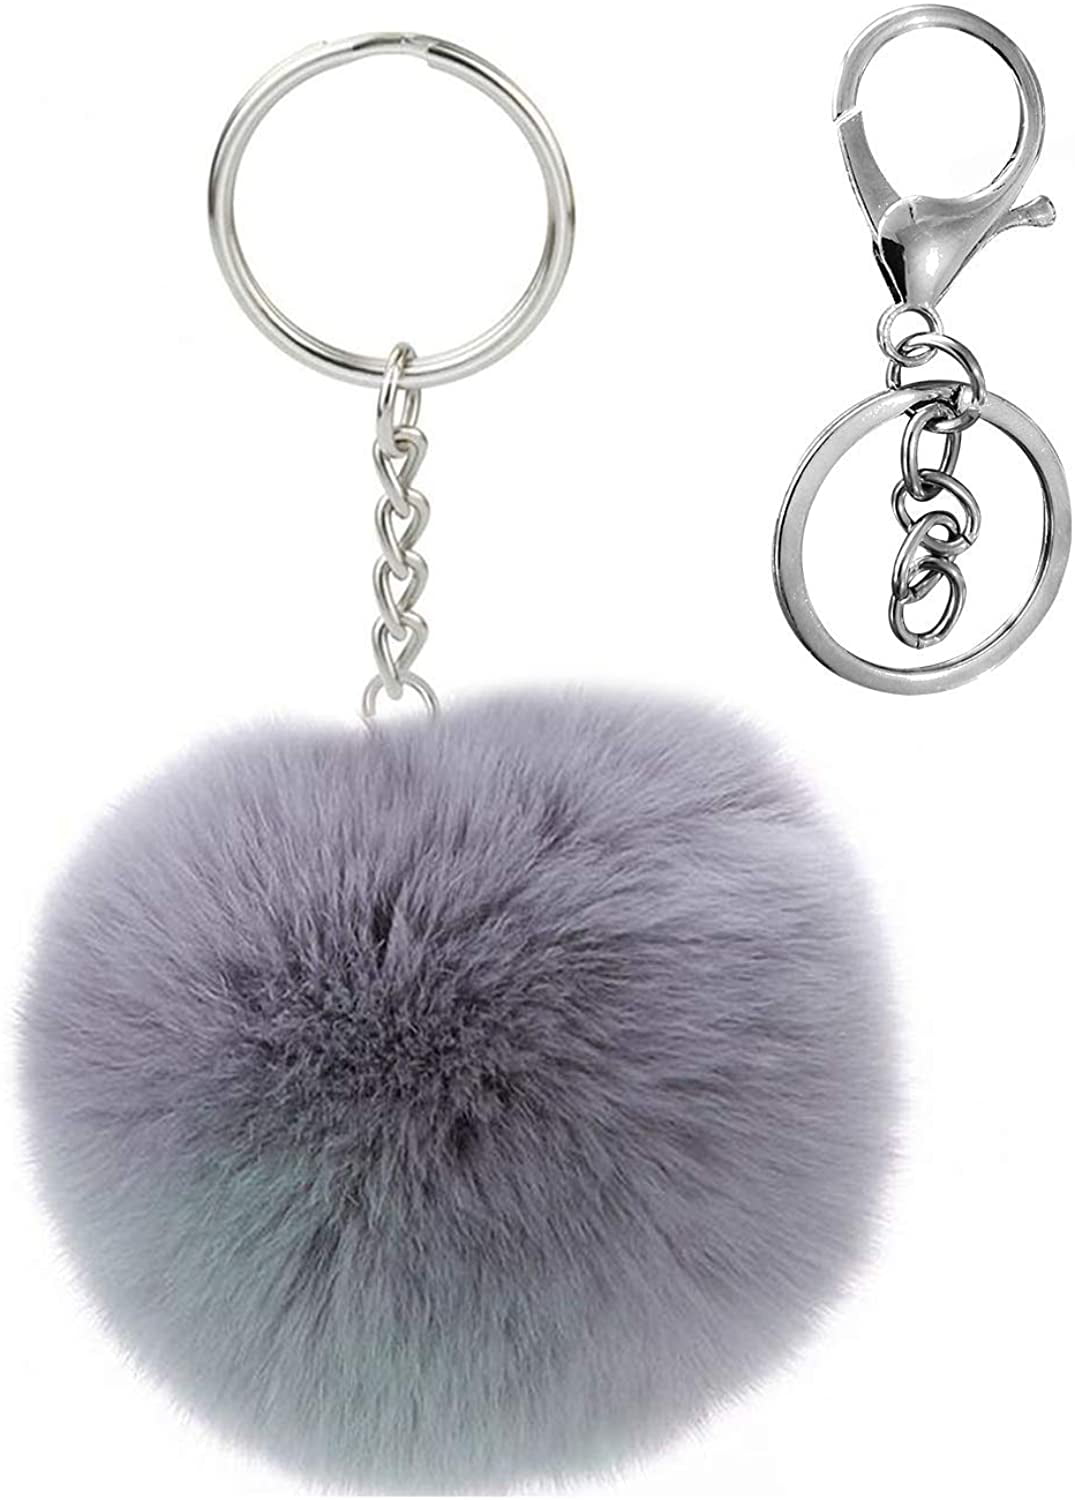 New Faux rabbit fur Key Ring Car Keychain Mobile Phone Tag Charm Bag Accessory 